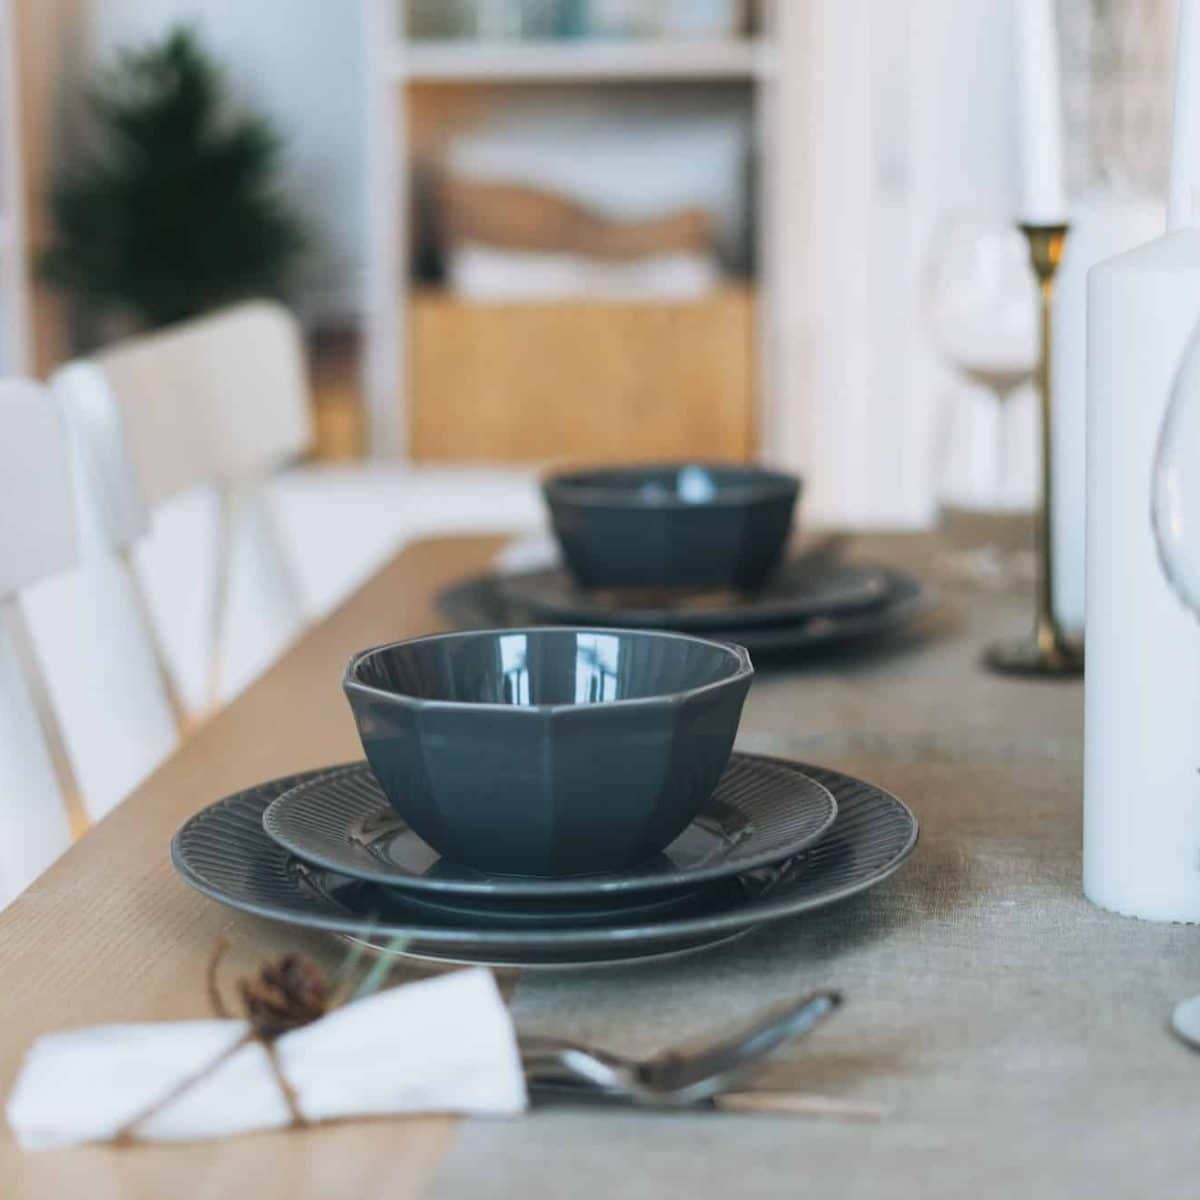 Serving festive table, grey plates, minimalism, scandinavian design at living room